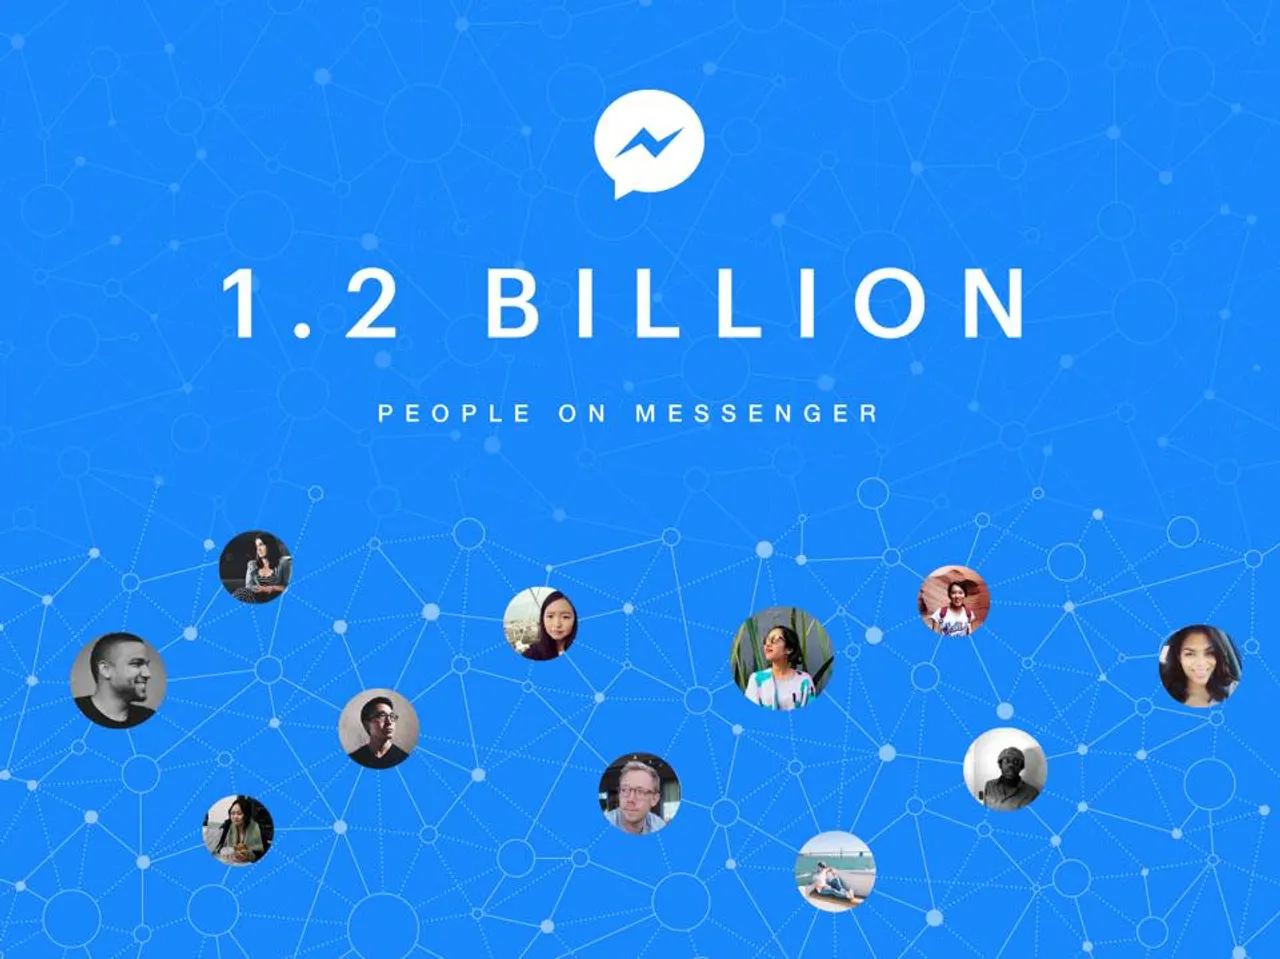 CIOL Facebook Messenger now garners 1.2 billion users